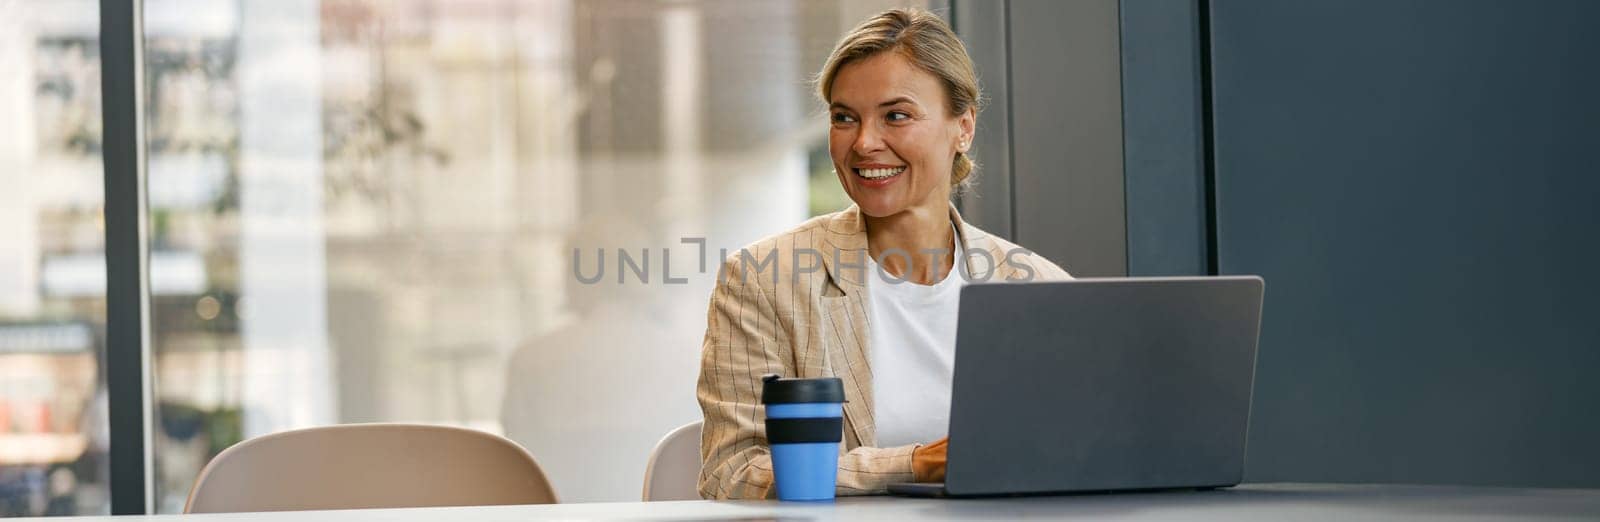 Smiling female entrepreneur working on laptop sitting the desk on office background and looks away by Yaroslav_astakhov